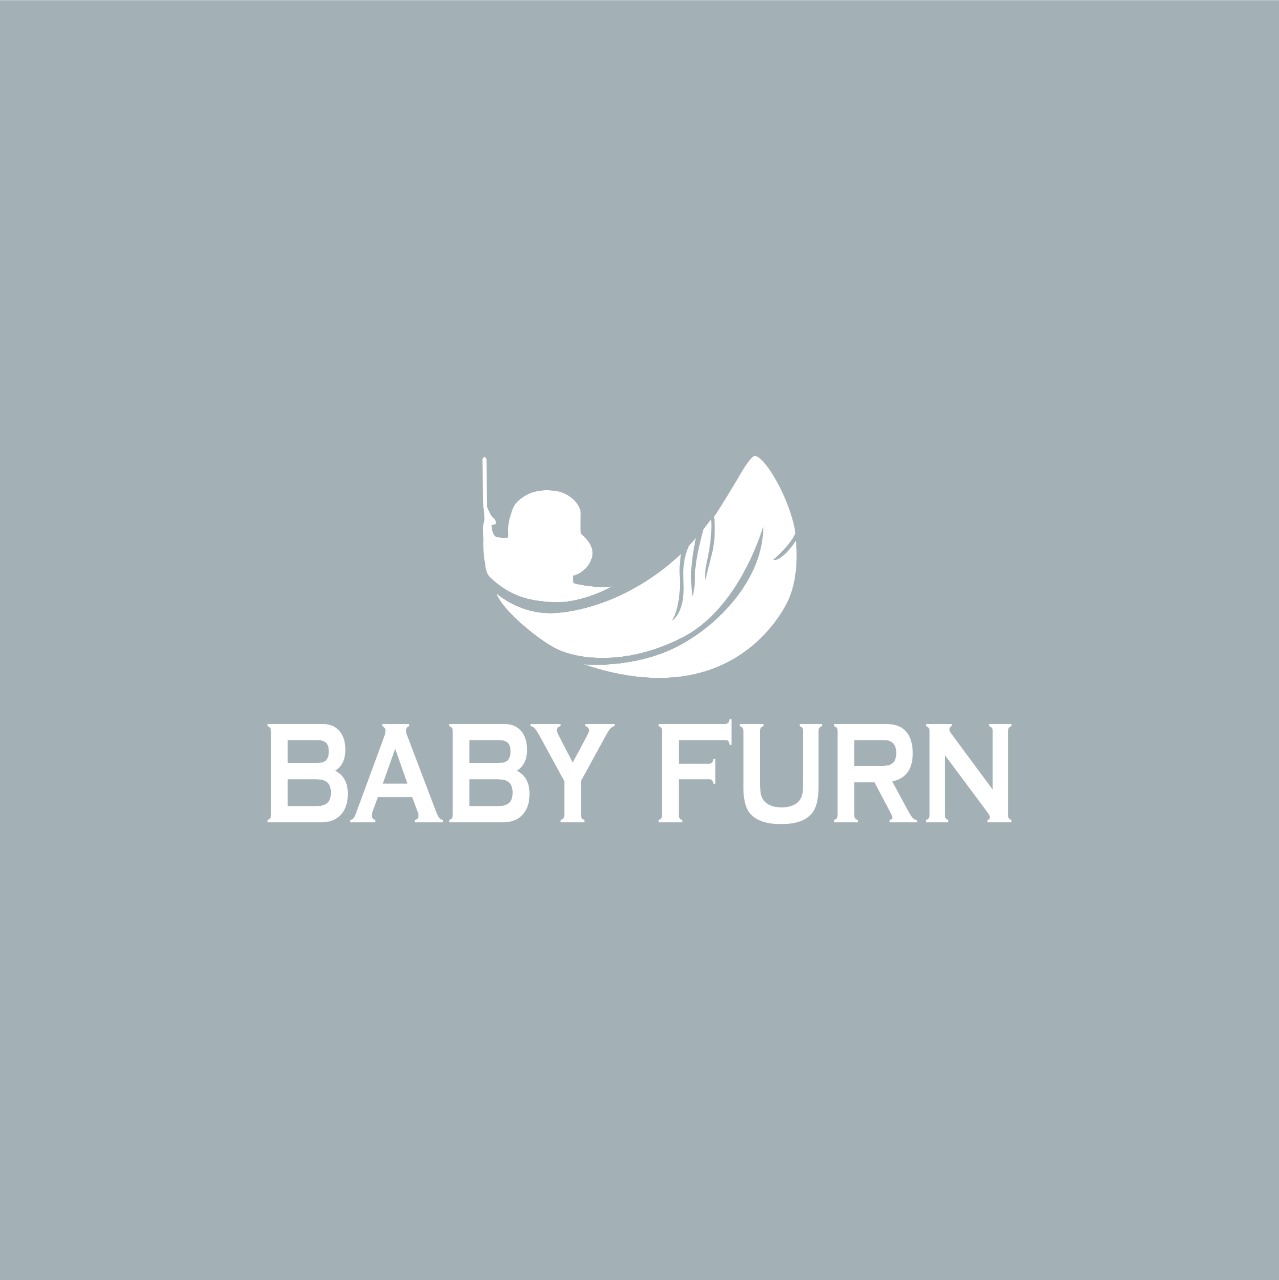 BABY FURN